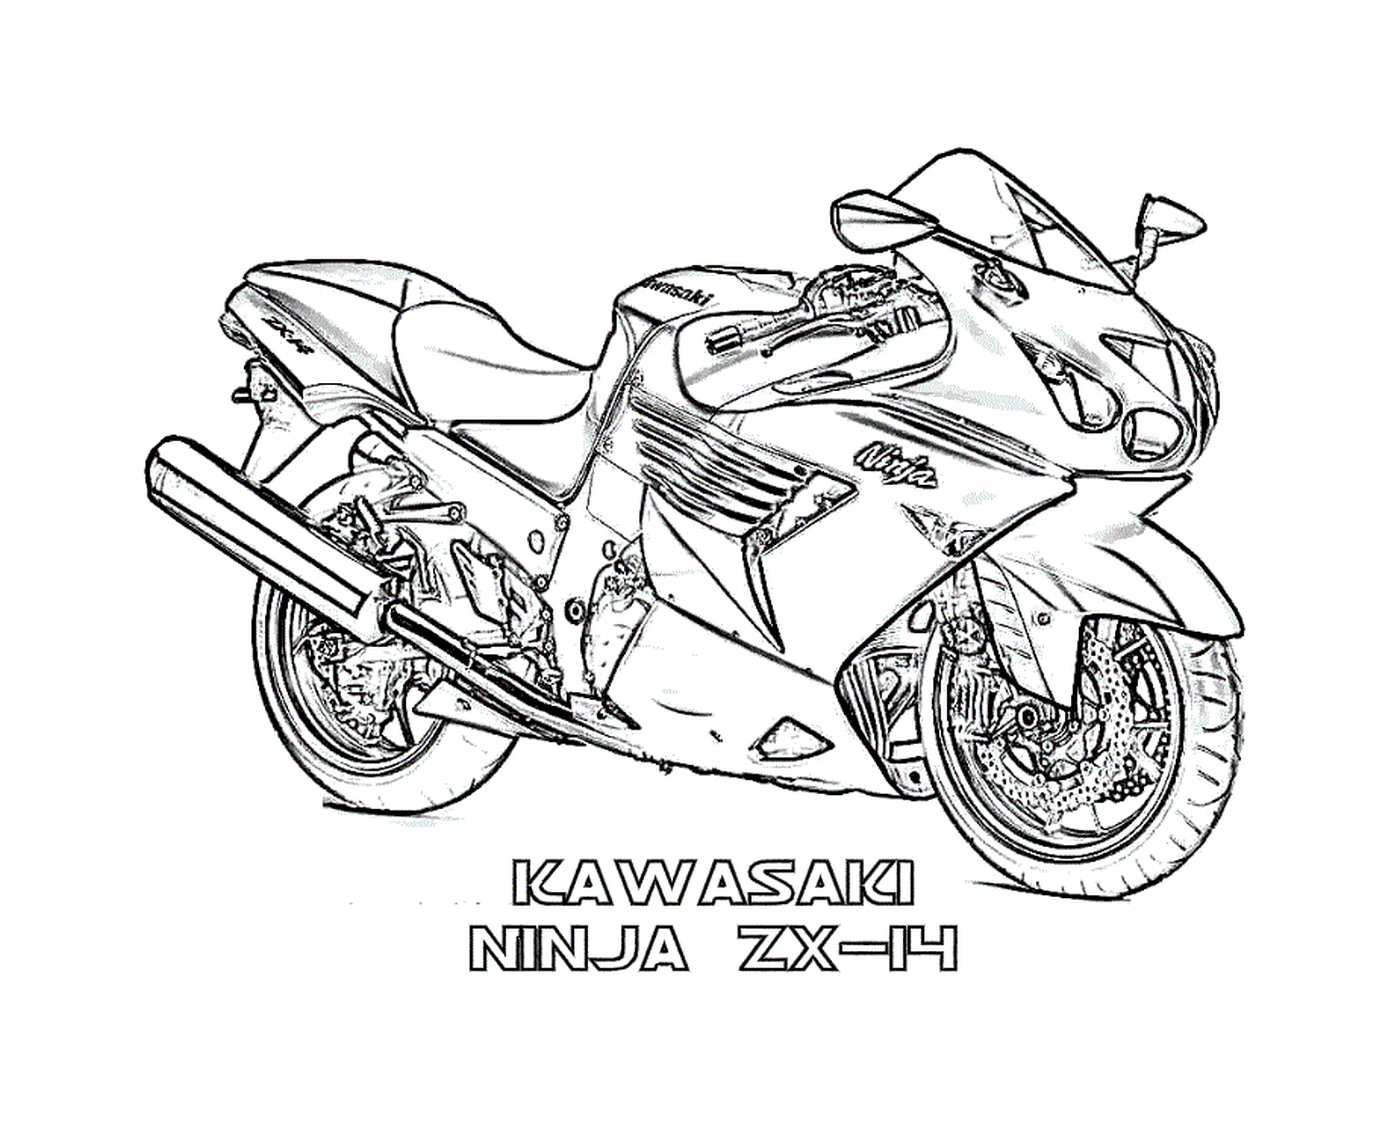  Kawasaki Ninja, Batman moto 